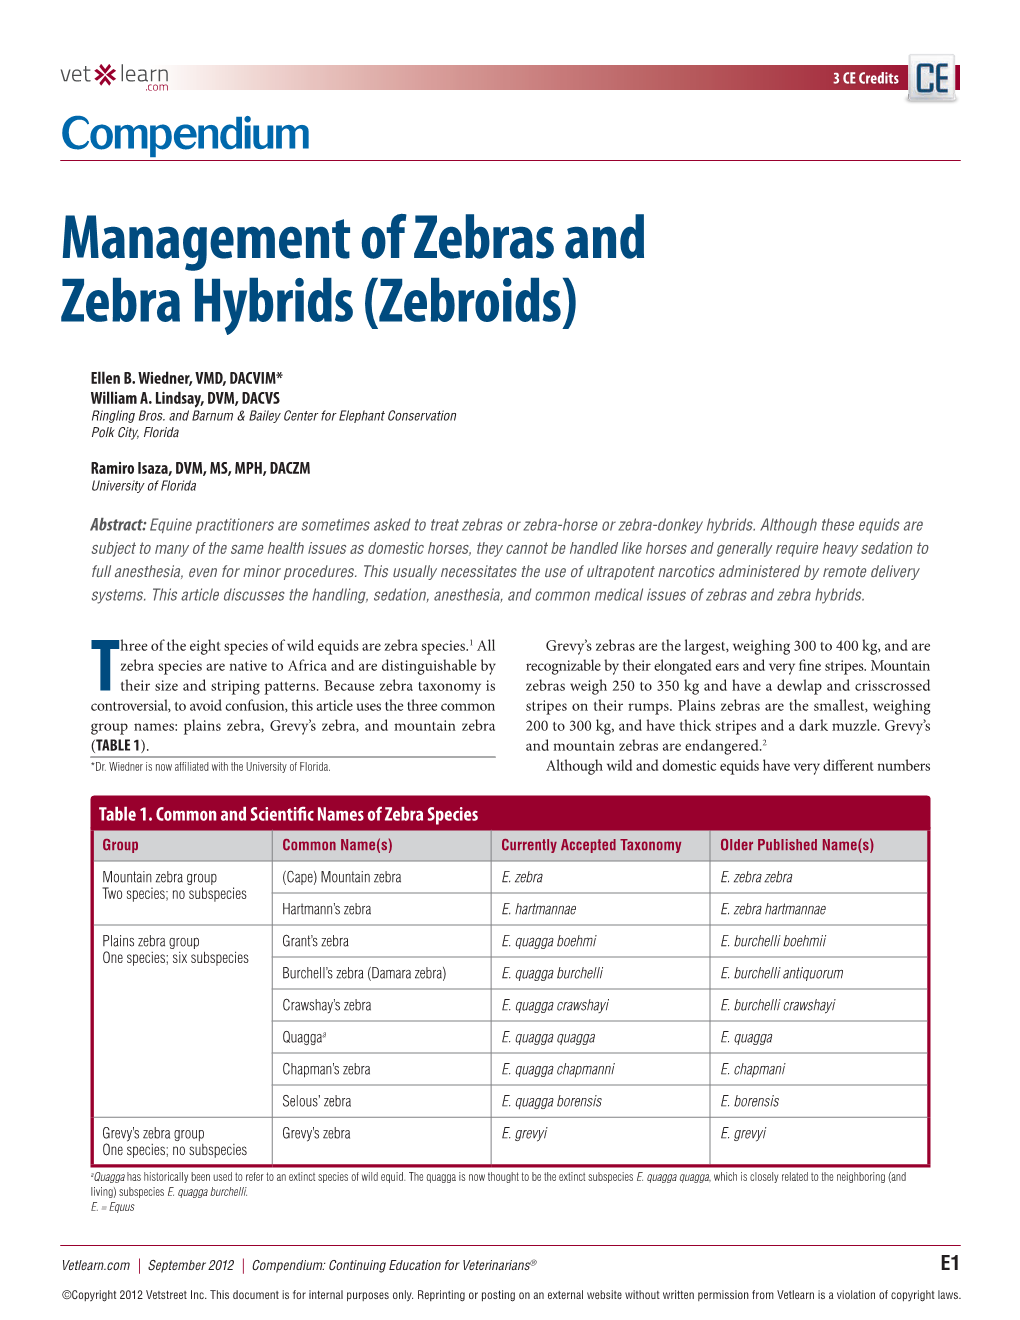 Management of Zebras and Zebra Hybrids (Zebroids)